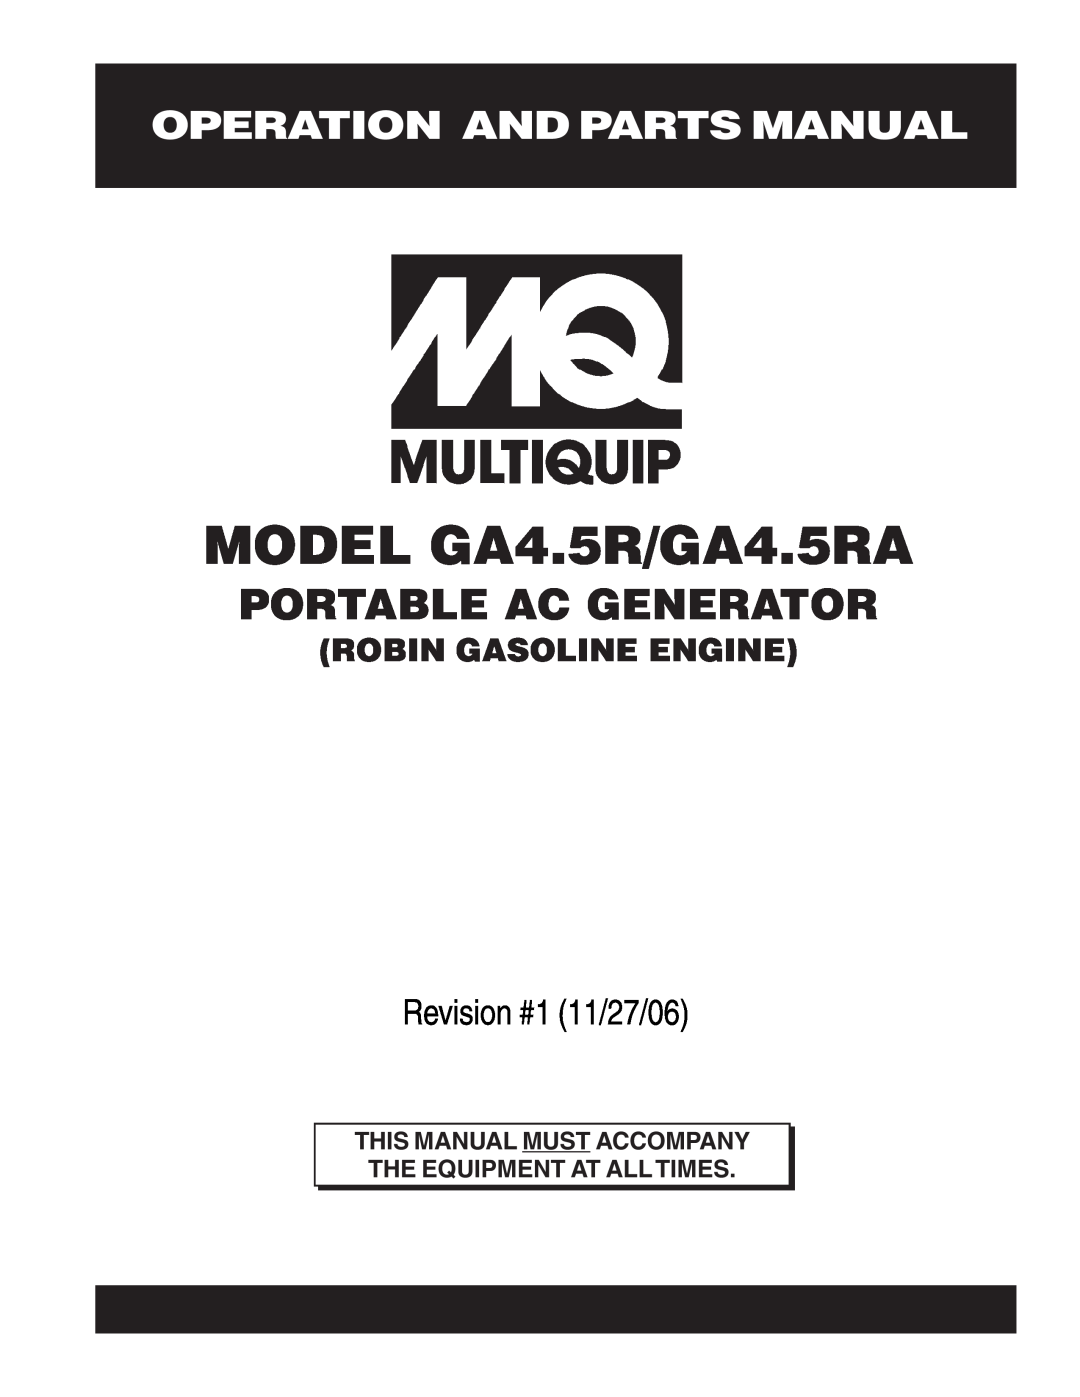 Multiquip manual Operation And Parts Manual, MODEL GA4.5R/GA4.5RA, Portable Ac Generator, Revision #1 11/27/06 